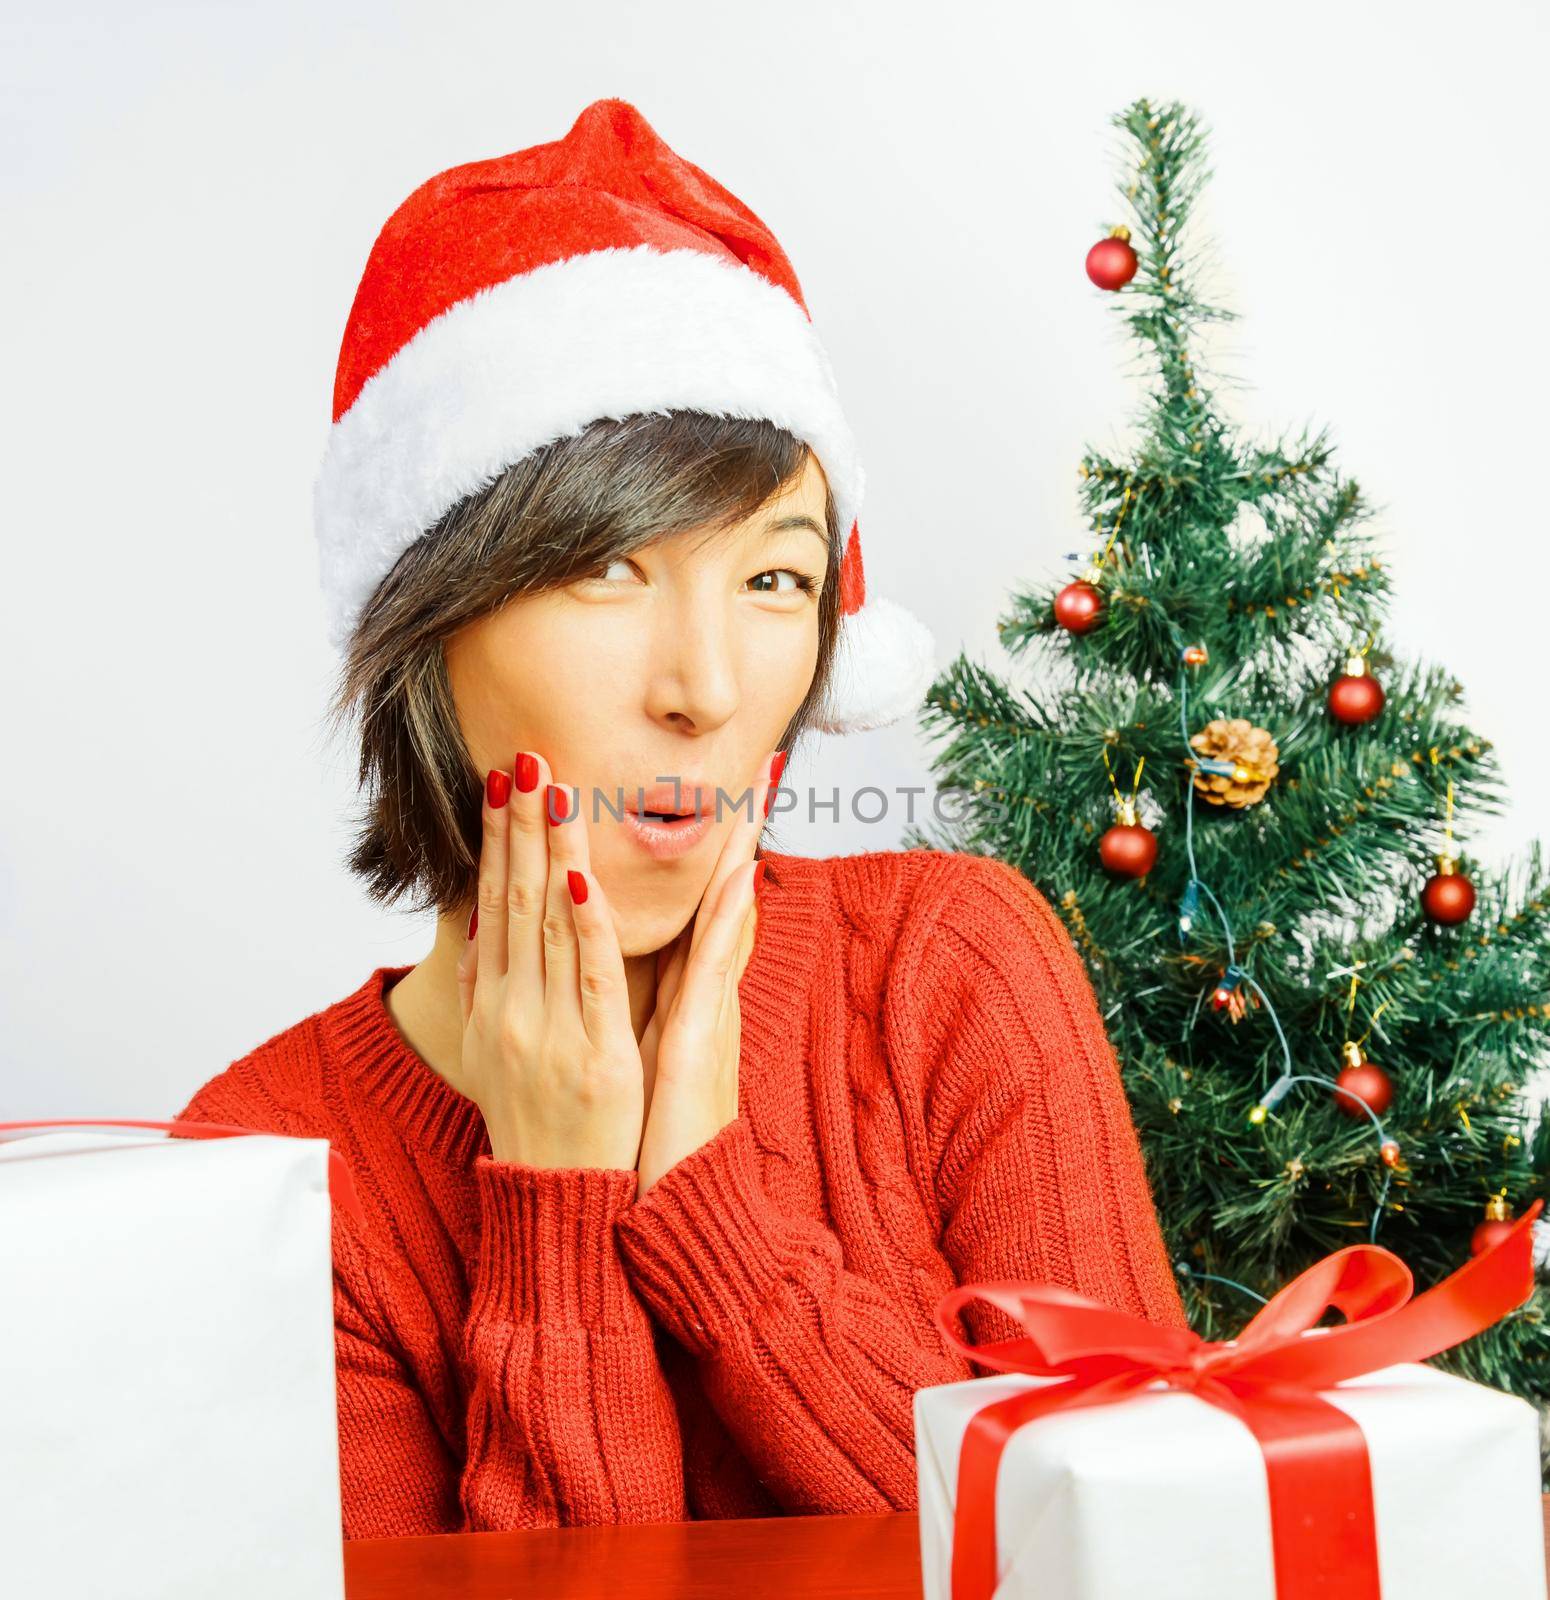 Не приняли из за Poor Light Woman on a background of Christmas tree by alexAleksei